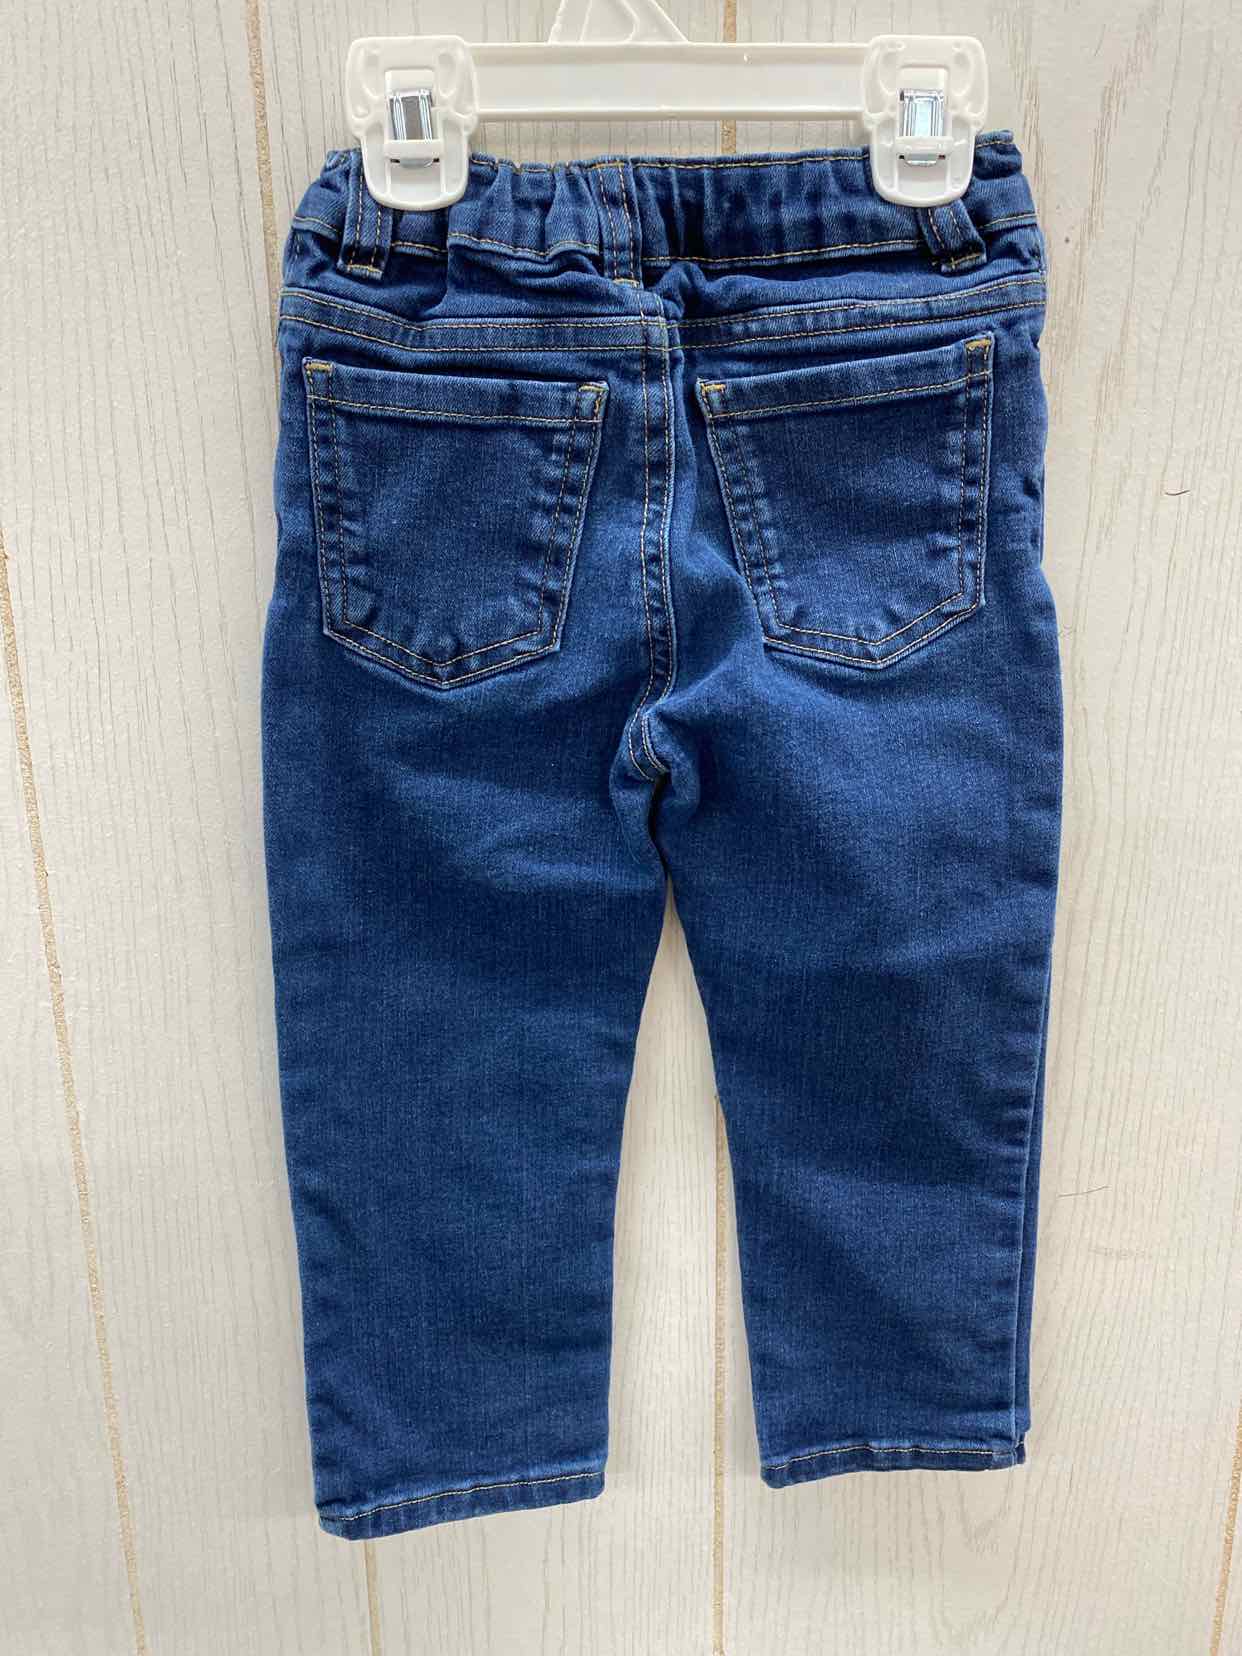 Garanimals Boys Size 3T Jeans